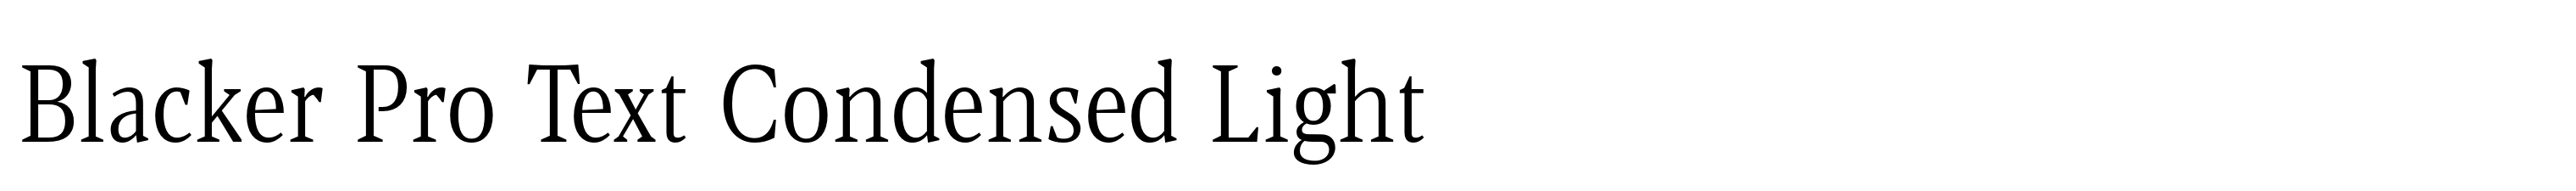 Blacker Pro Text Condensed Light